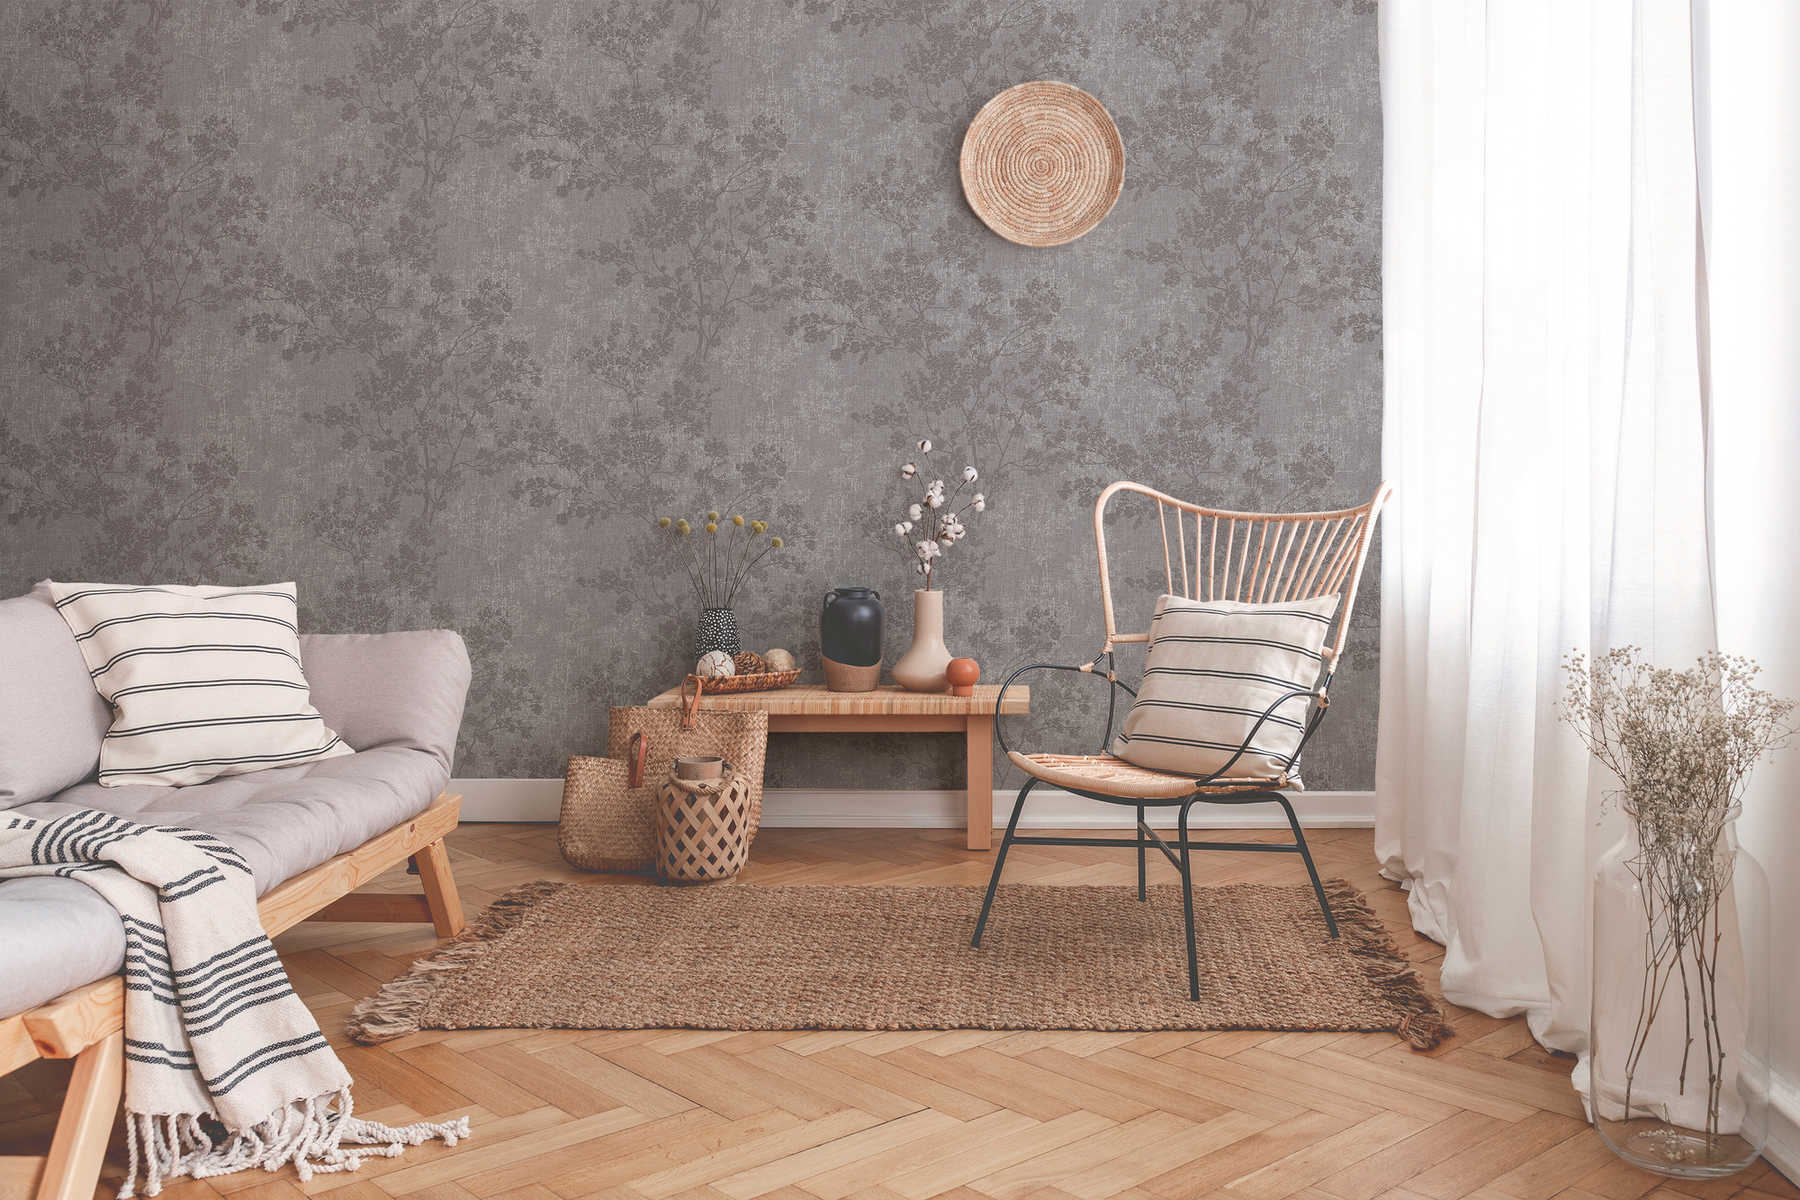             wallpaper leaves pattern in linen look - grey, brown
        